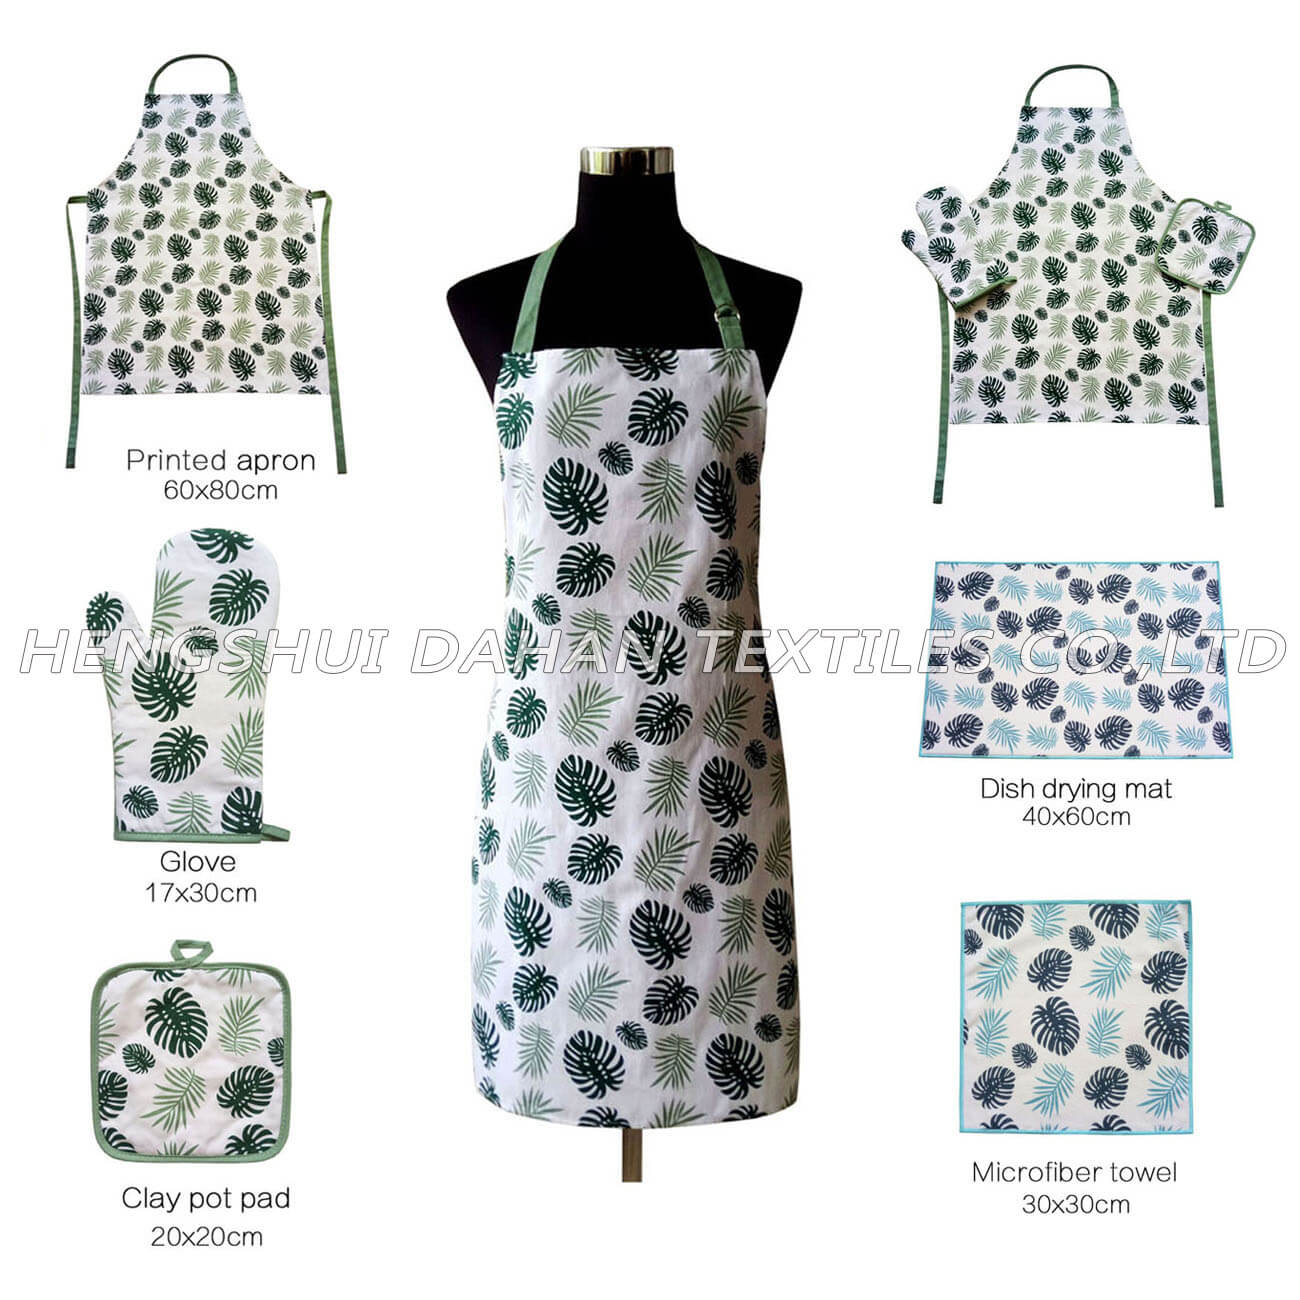 AGP33 Printing apron,dish drying mat,oven mitt,potholder,microfiber towel 5 packs